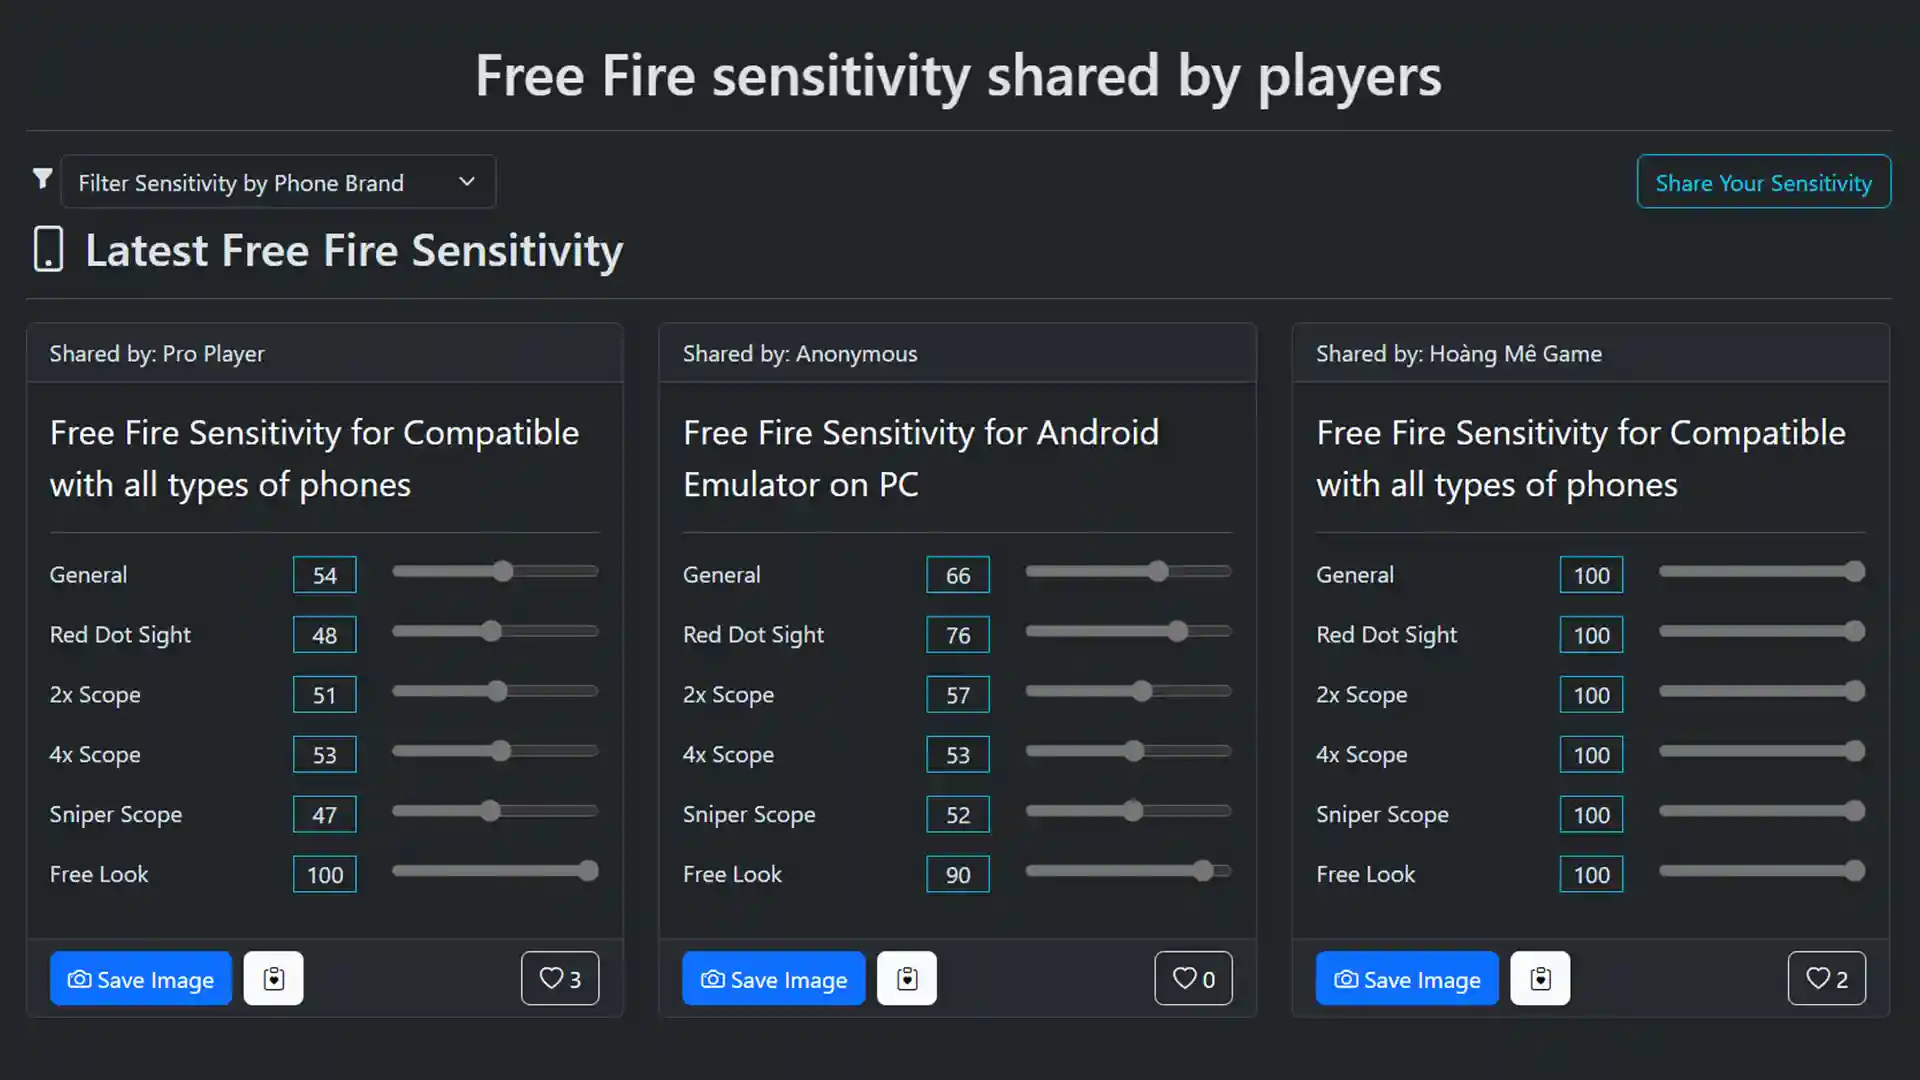 Free Fire sensitivity